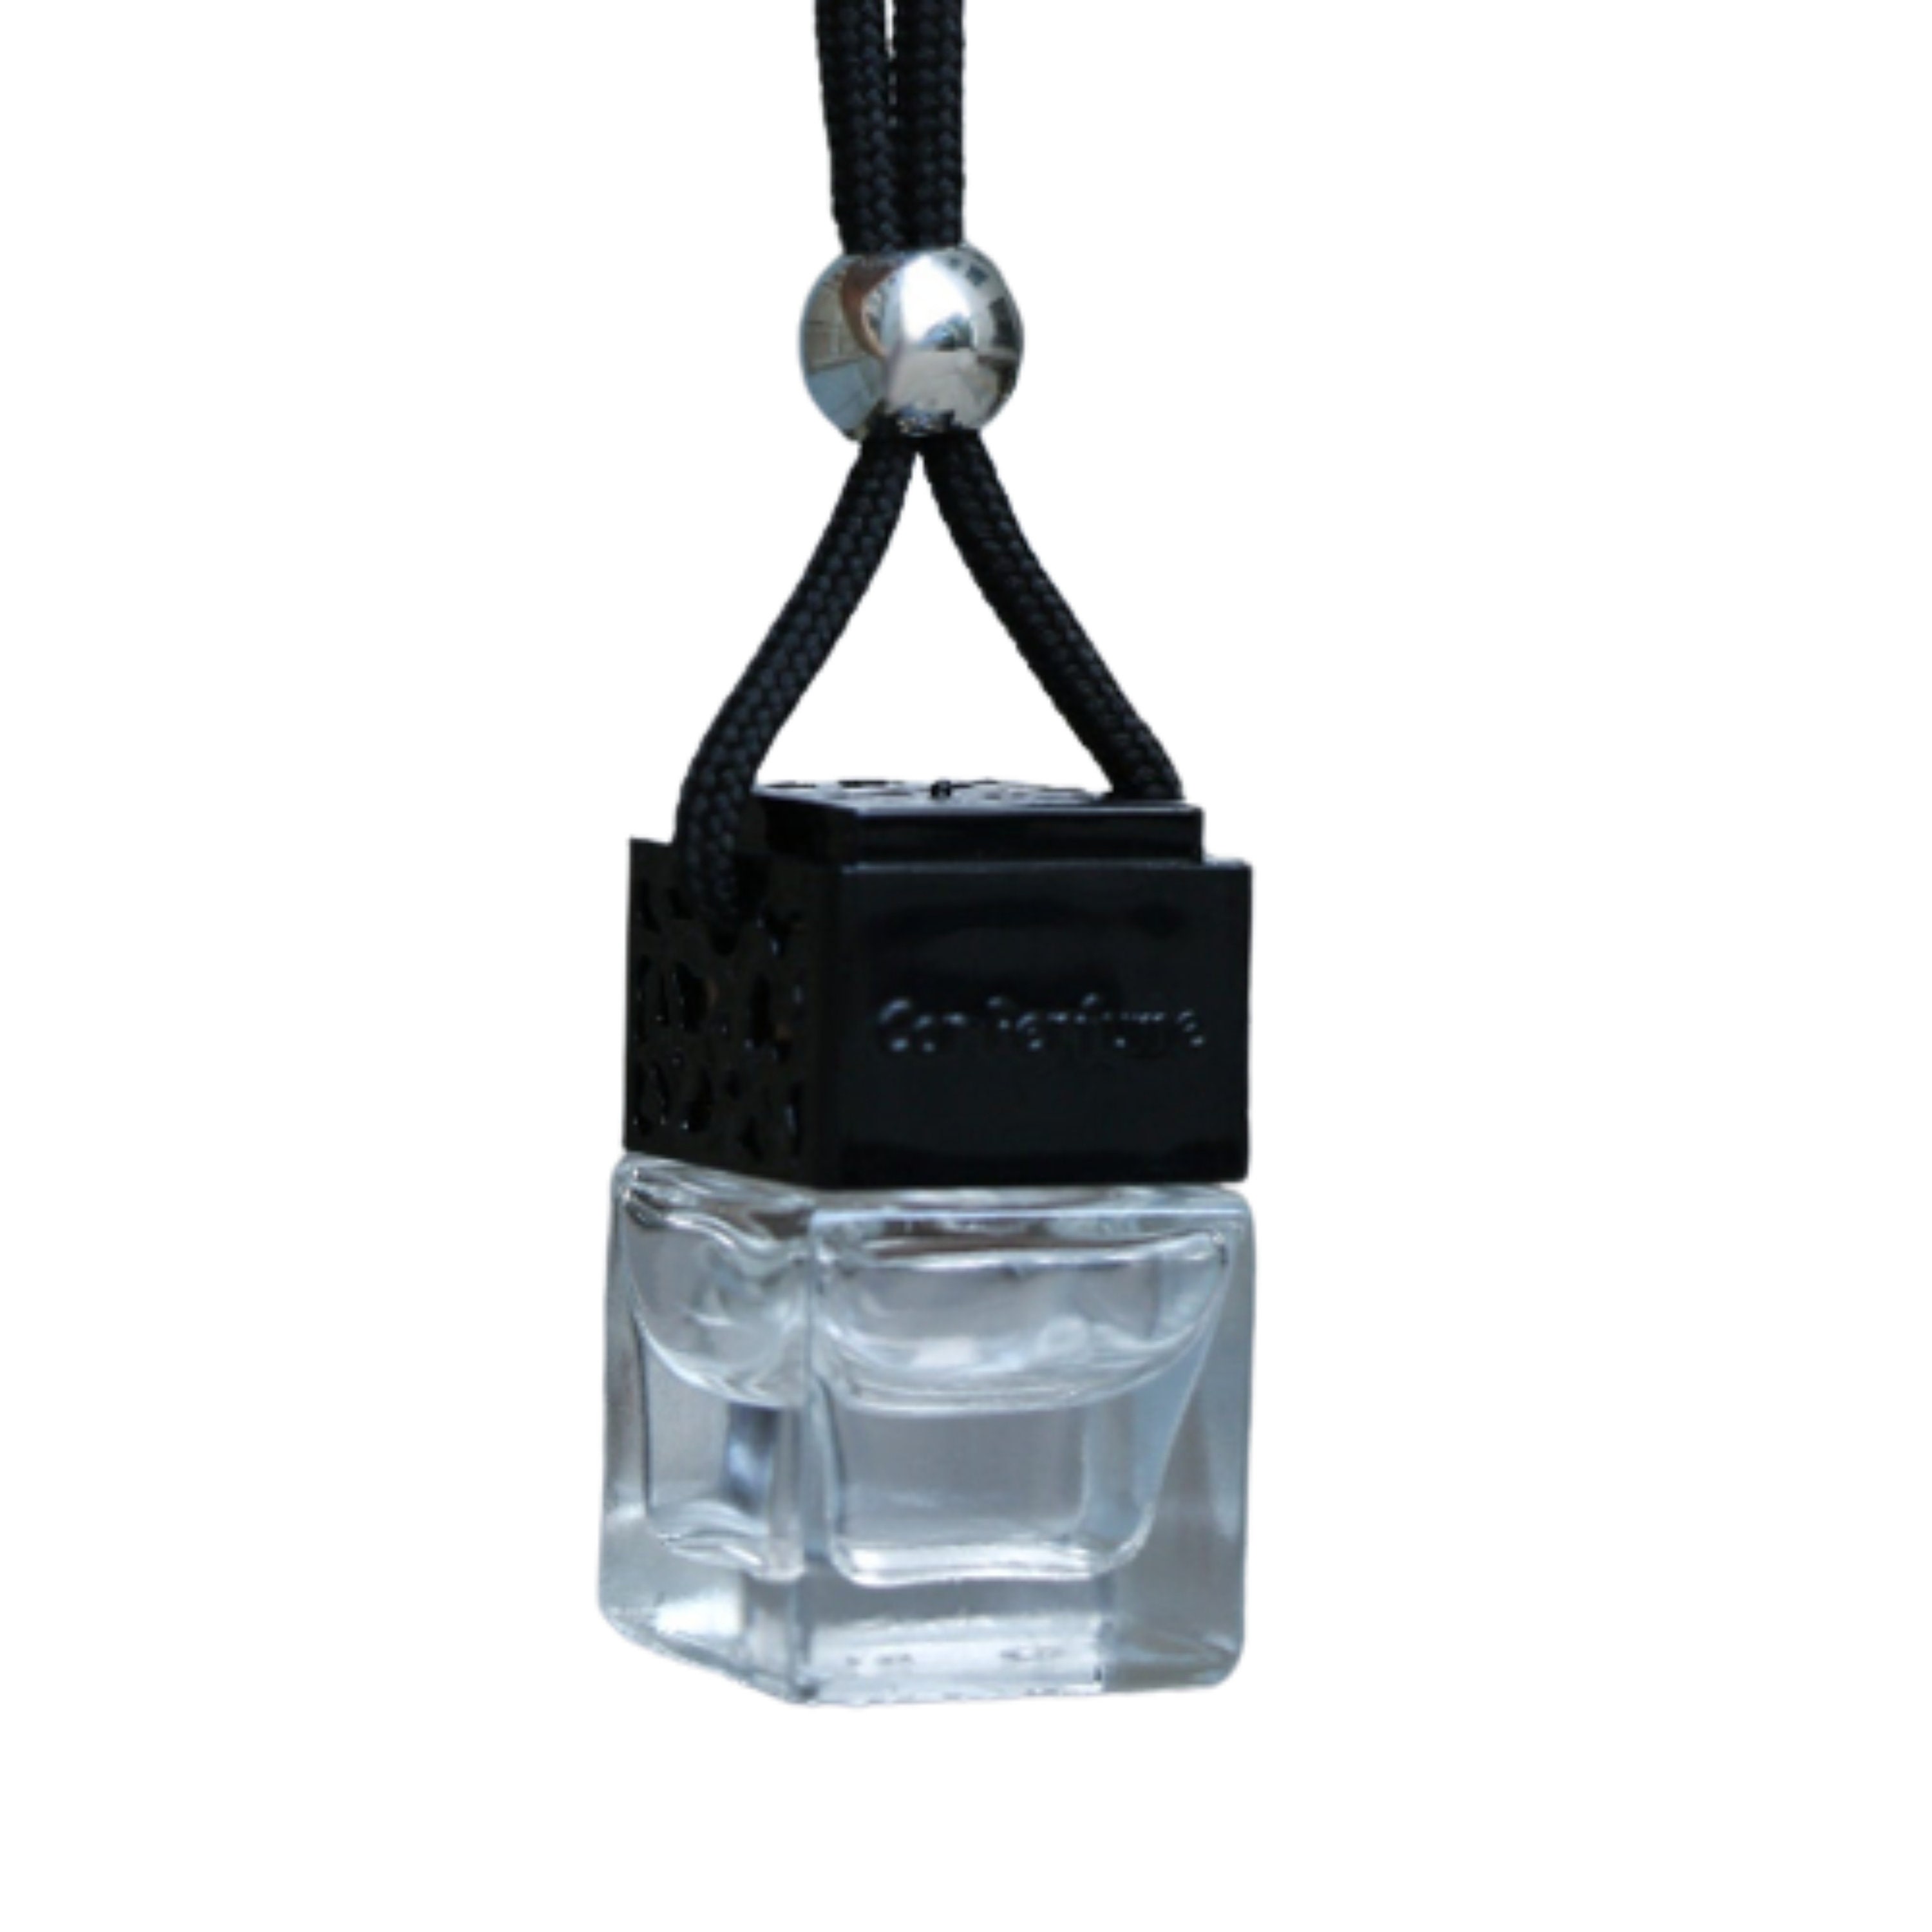 Empty car diffuser Bottle Perfume Ornament Hanging Gadget Air Freshener  Wood Cap